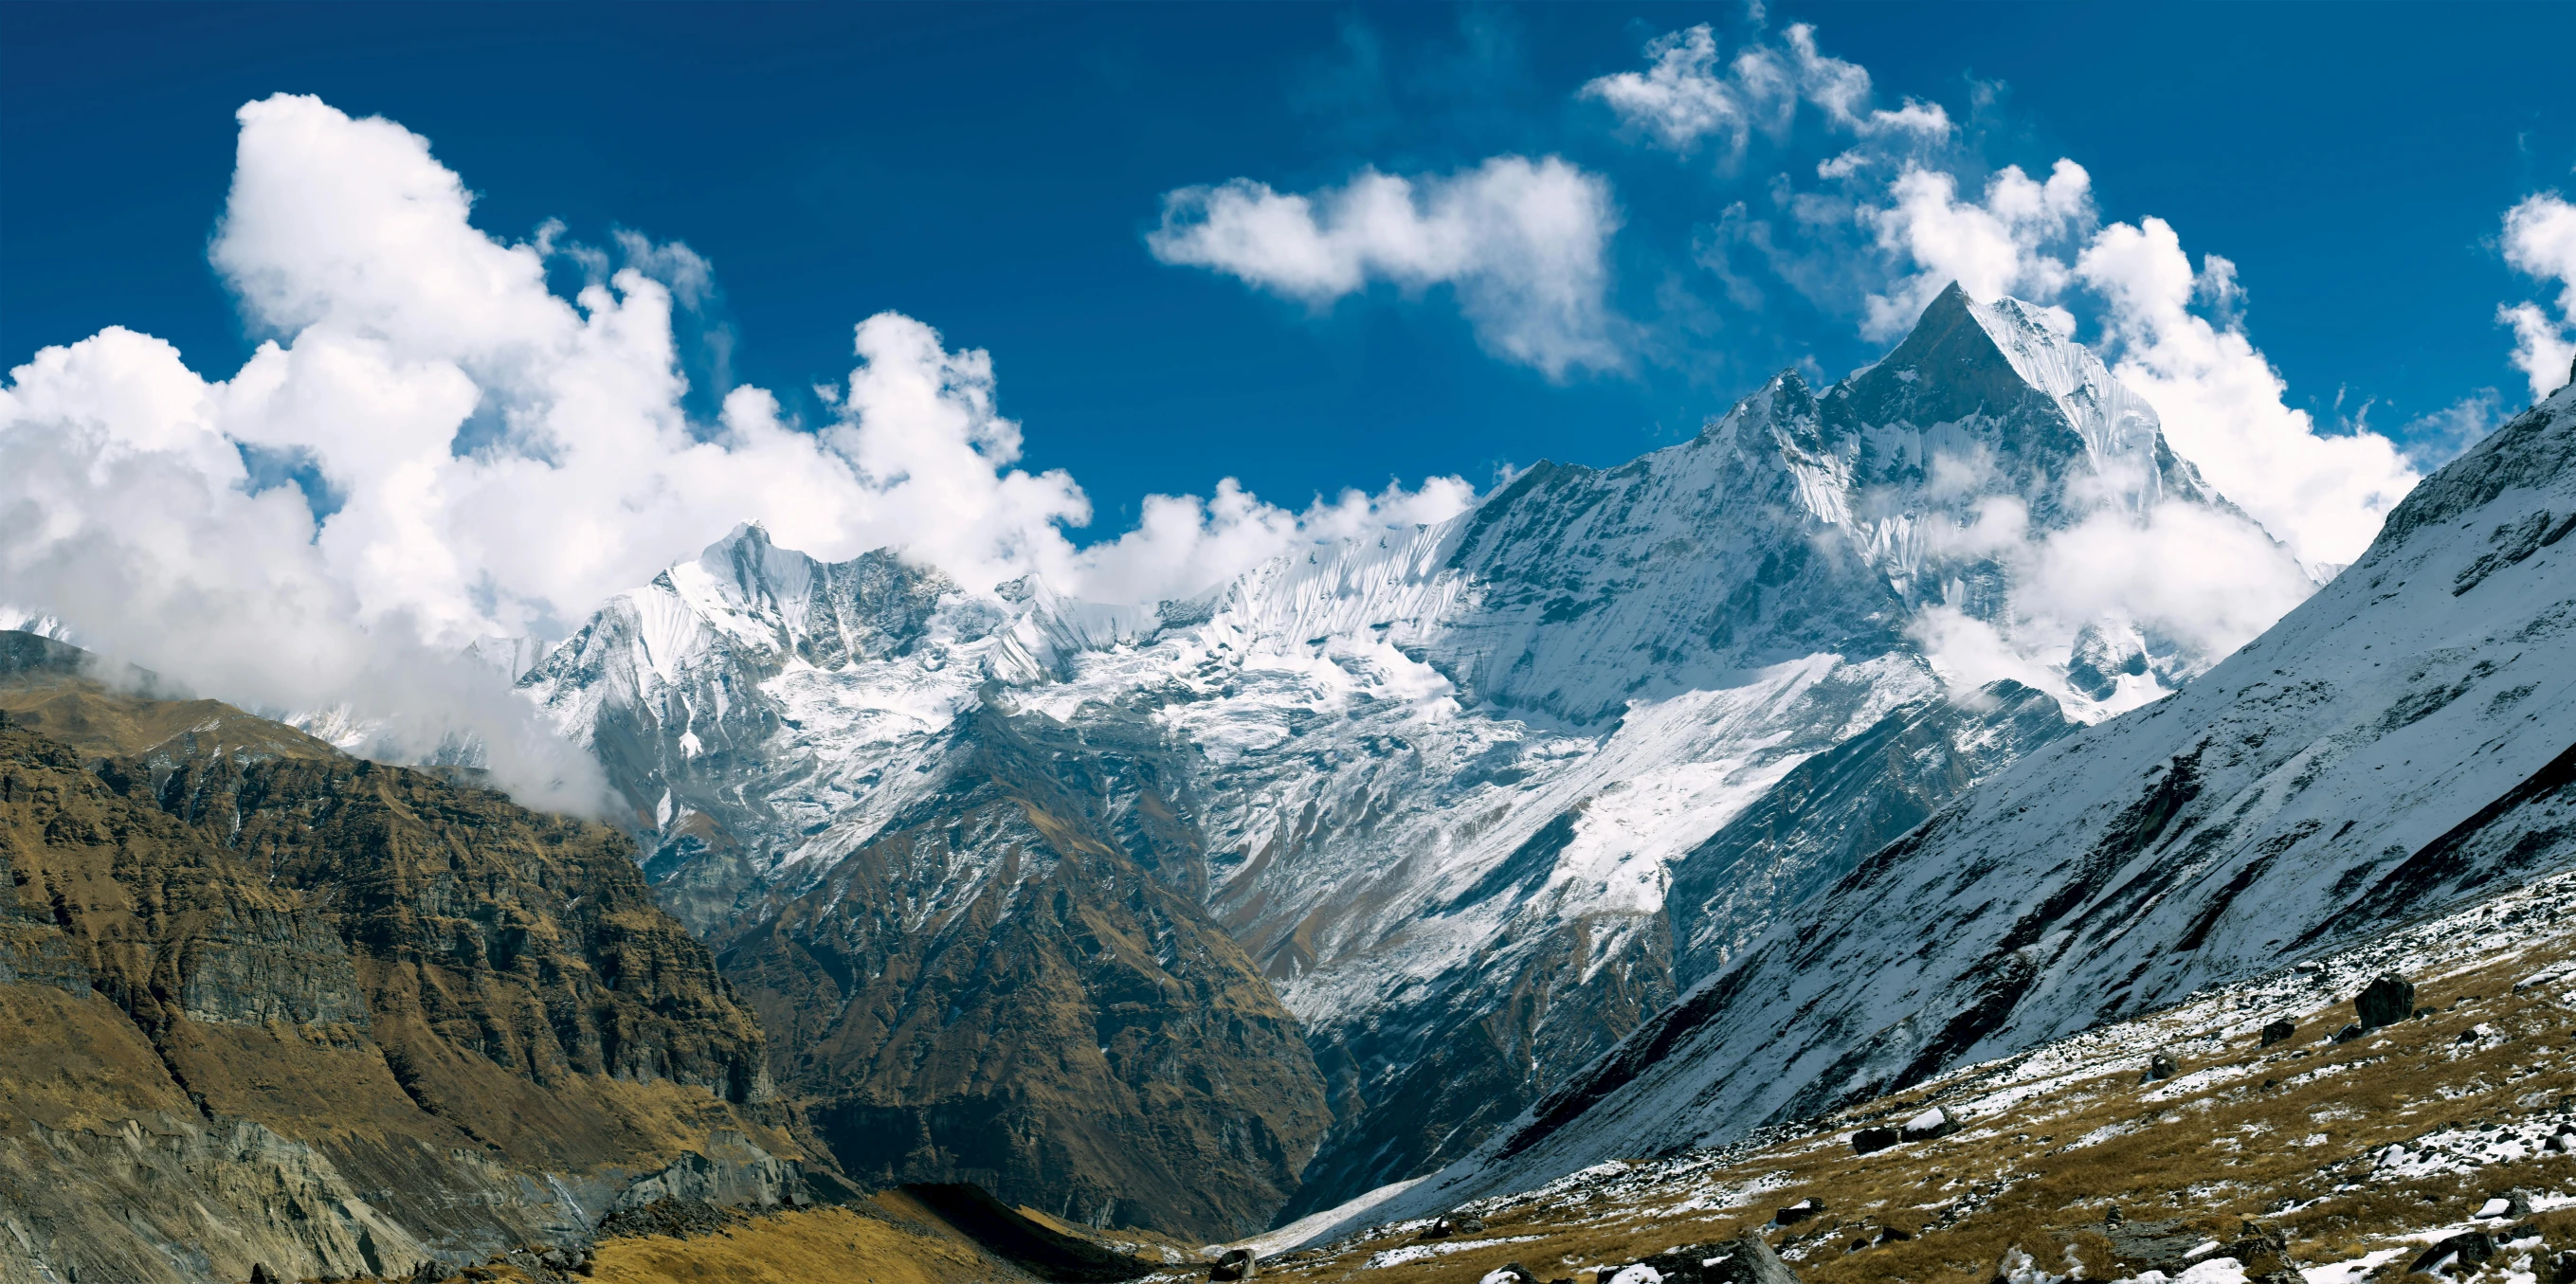 a group of sheep grazing on the side of a mountain, trending on unsplash, hurufiyya, nepal, panoramic shot, 2000s photo, glacier